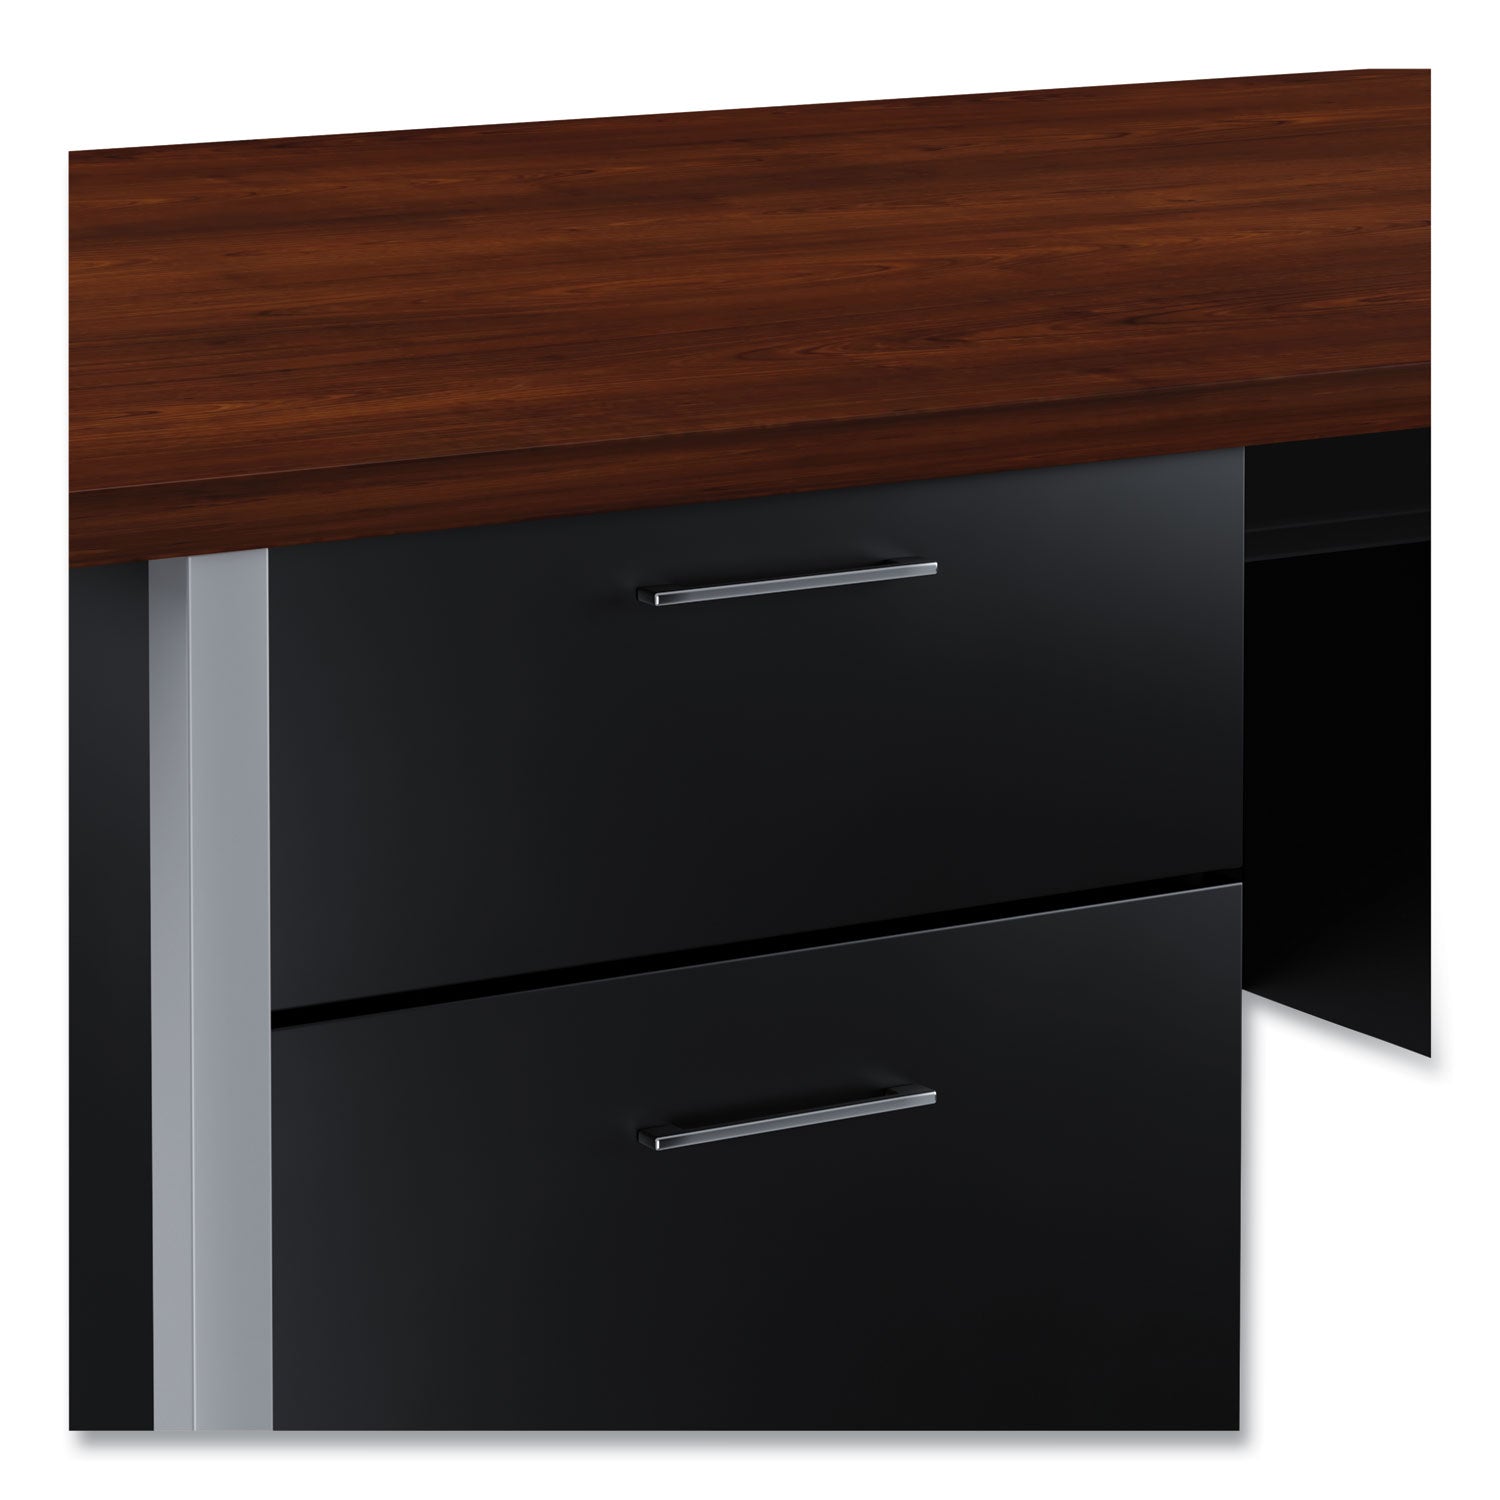 double-pedestal-steel-desk-72-x-36-x-295-mocha-black-chrome-plated-legs_alesd7236bm - 7